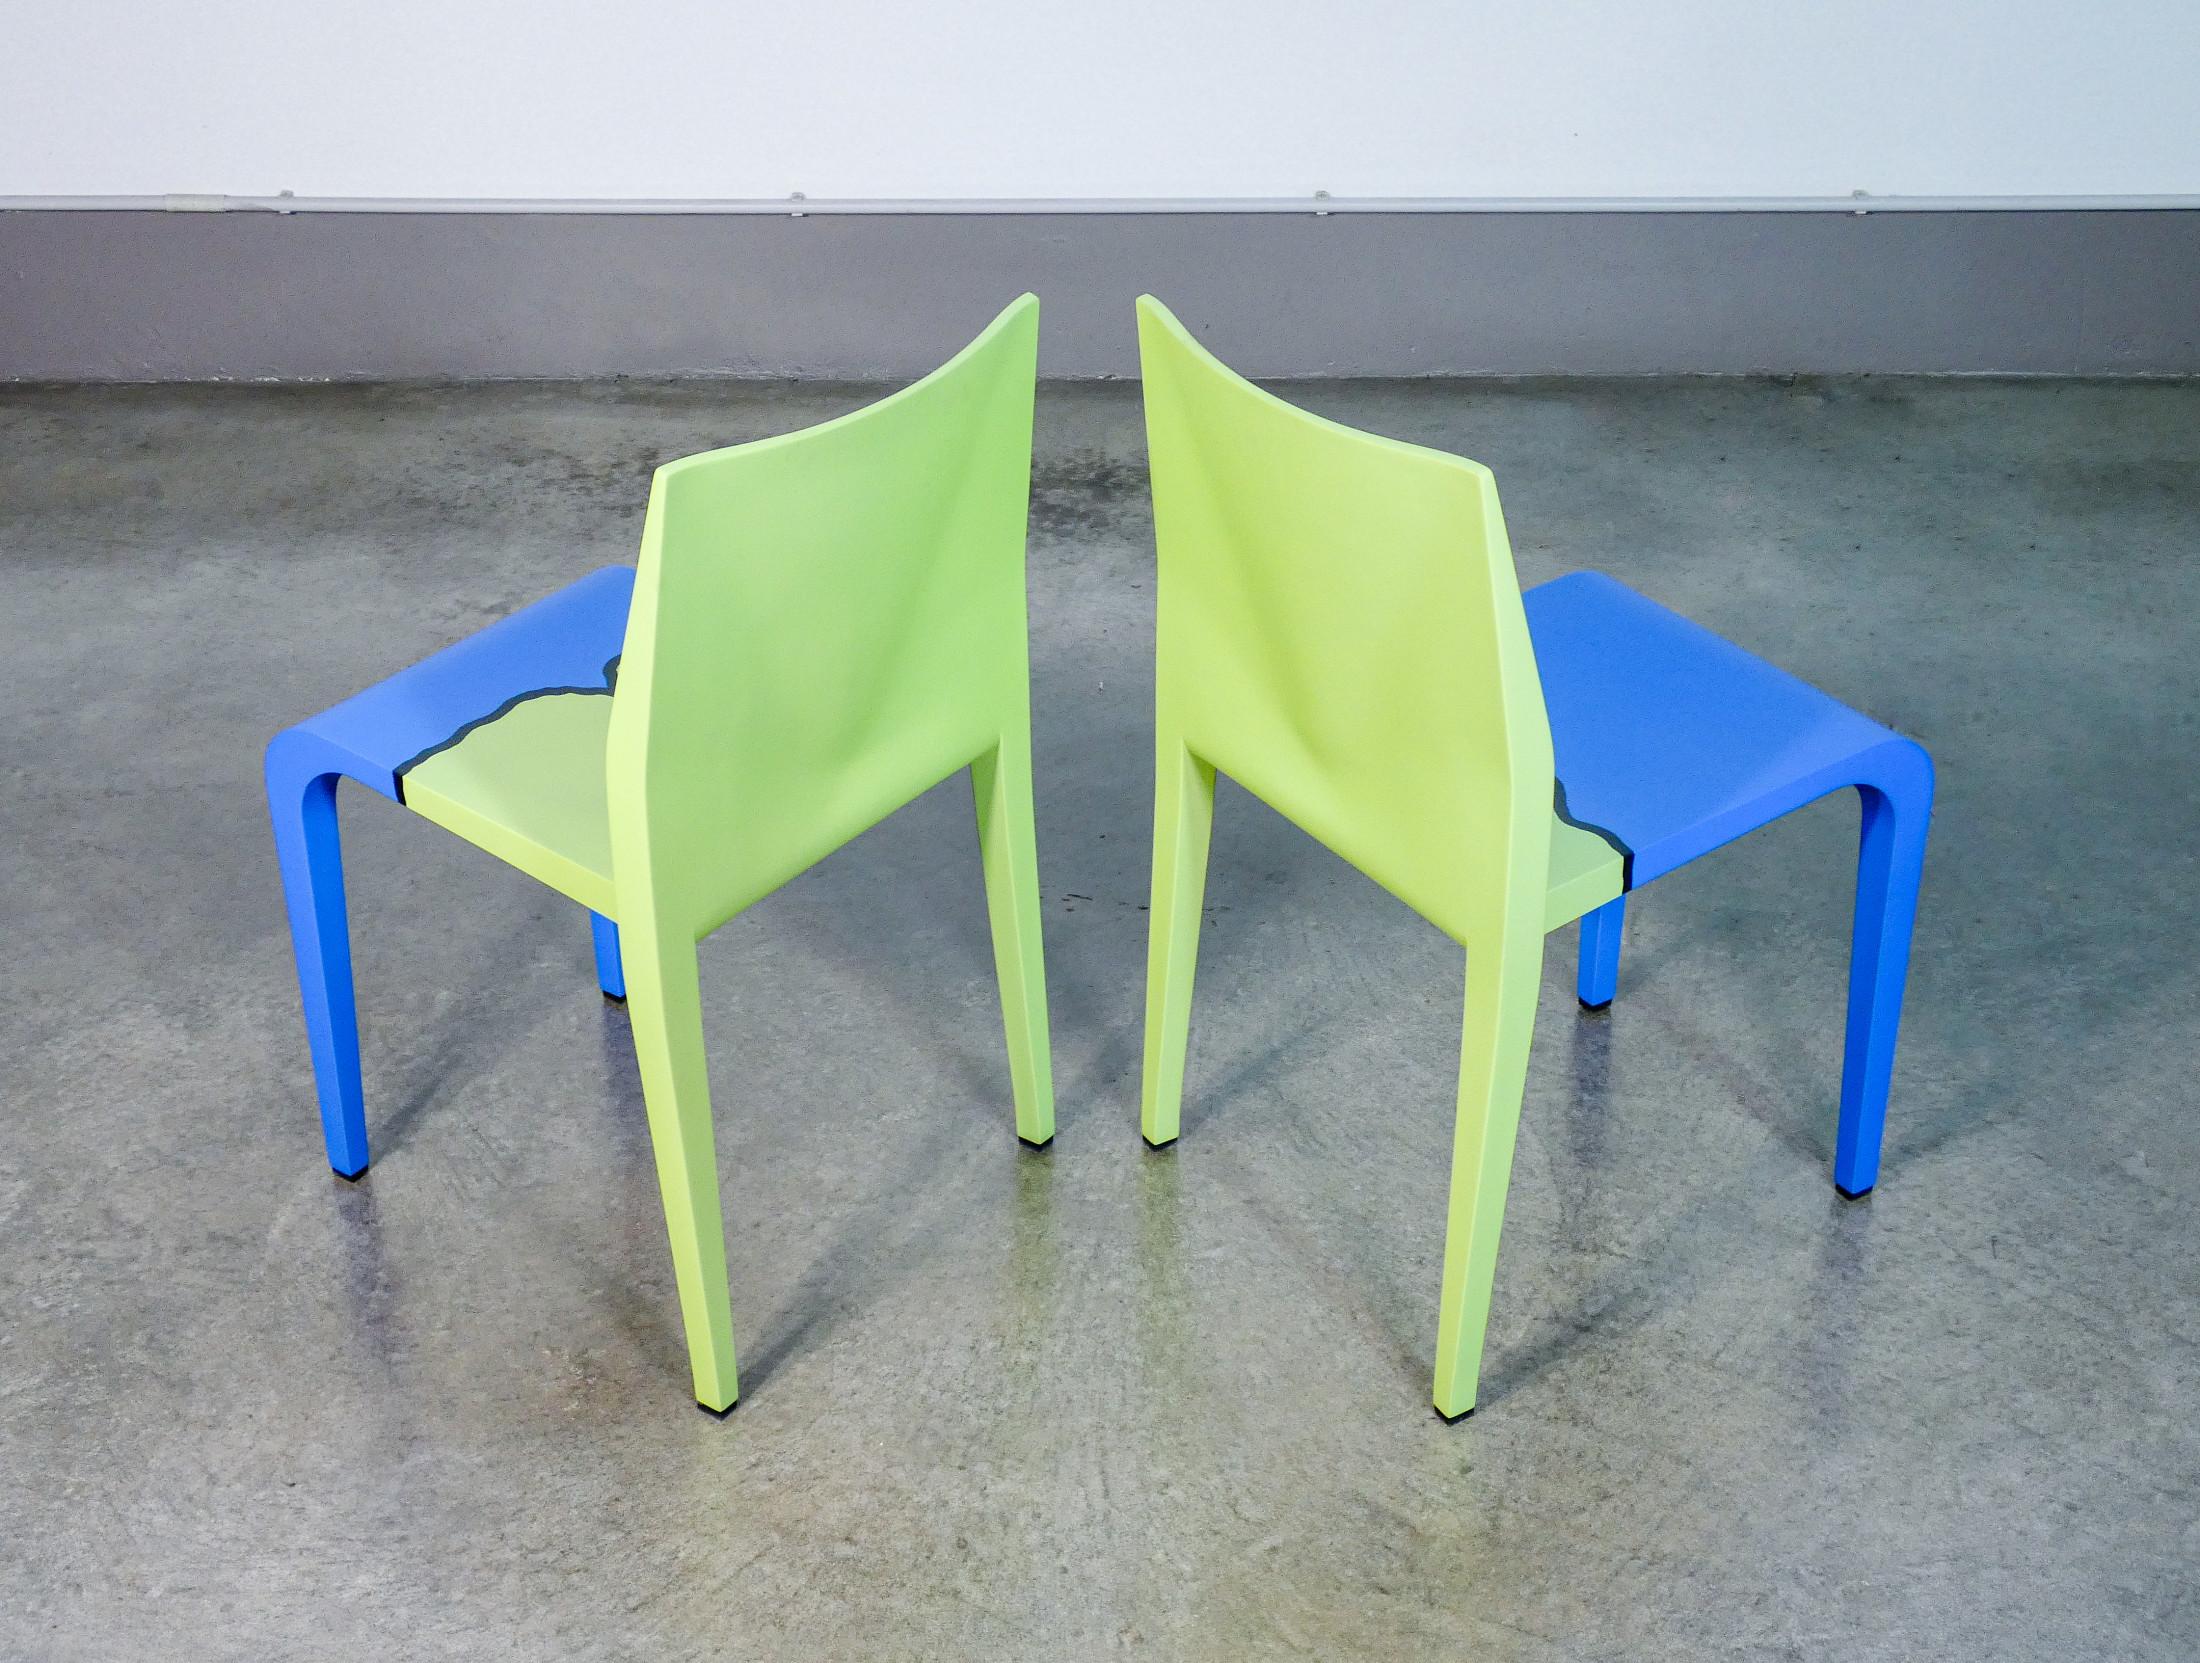 Pair of Laleggera chairs, part of the work 